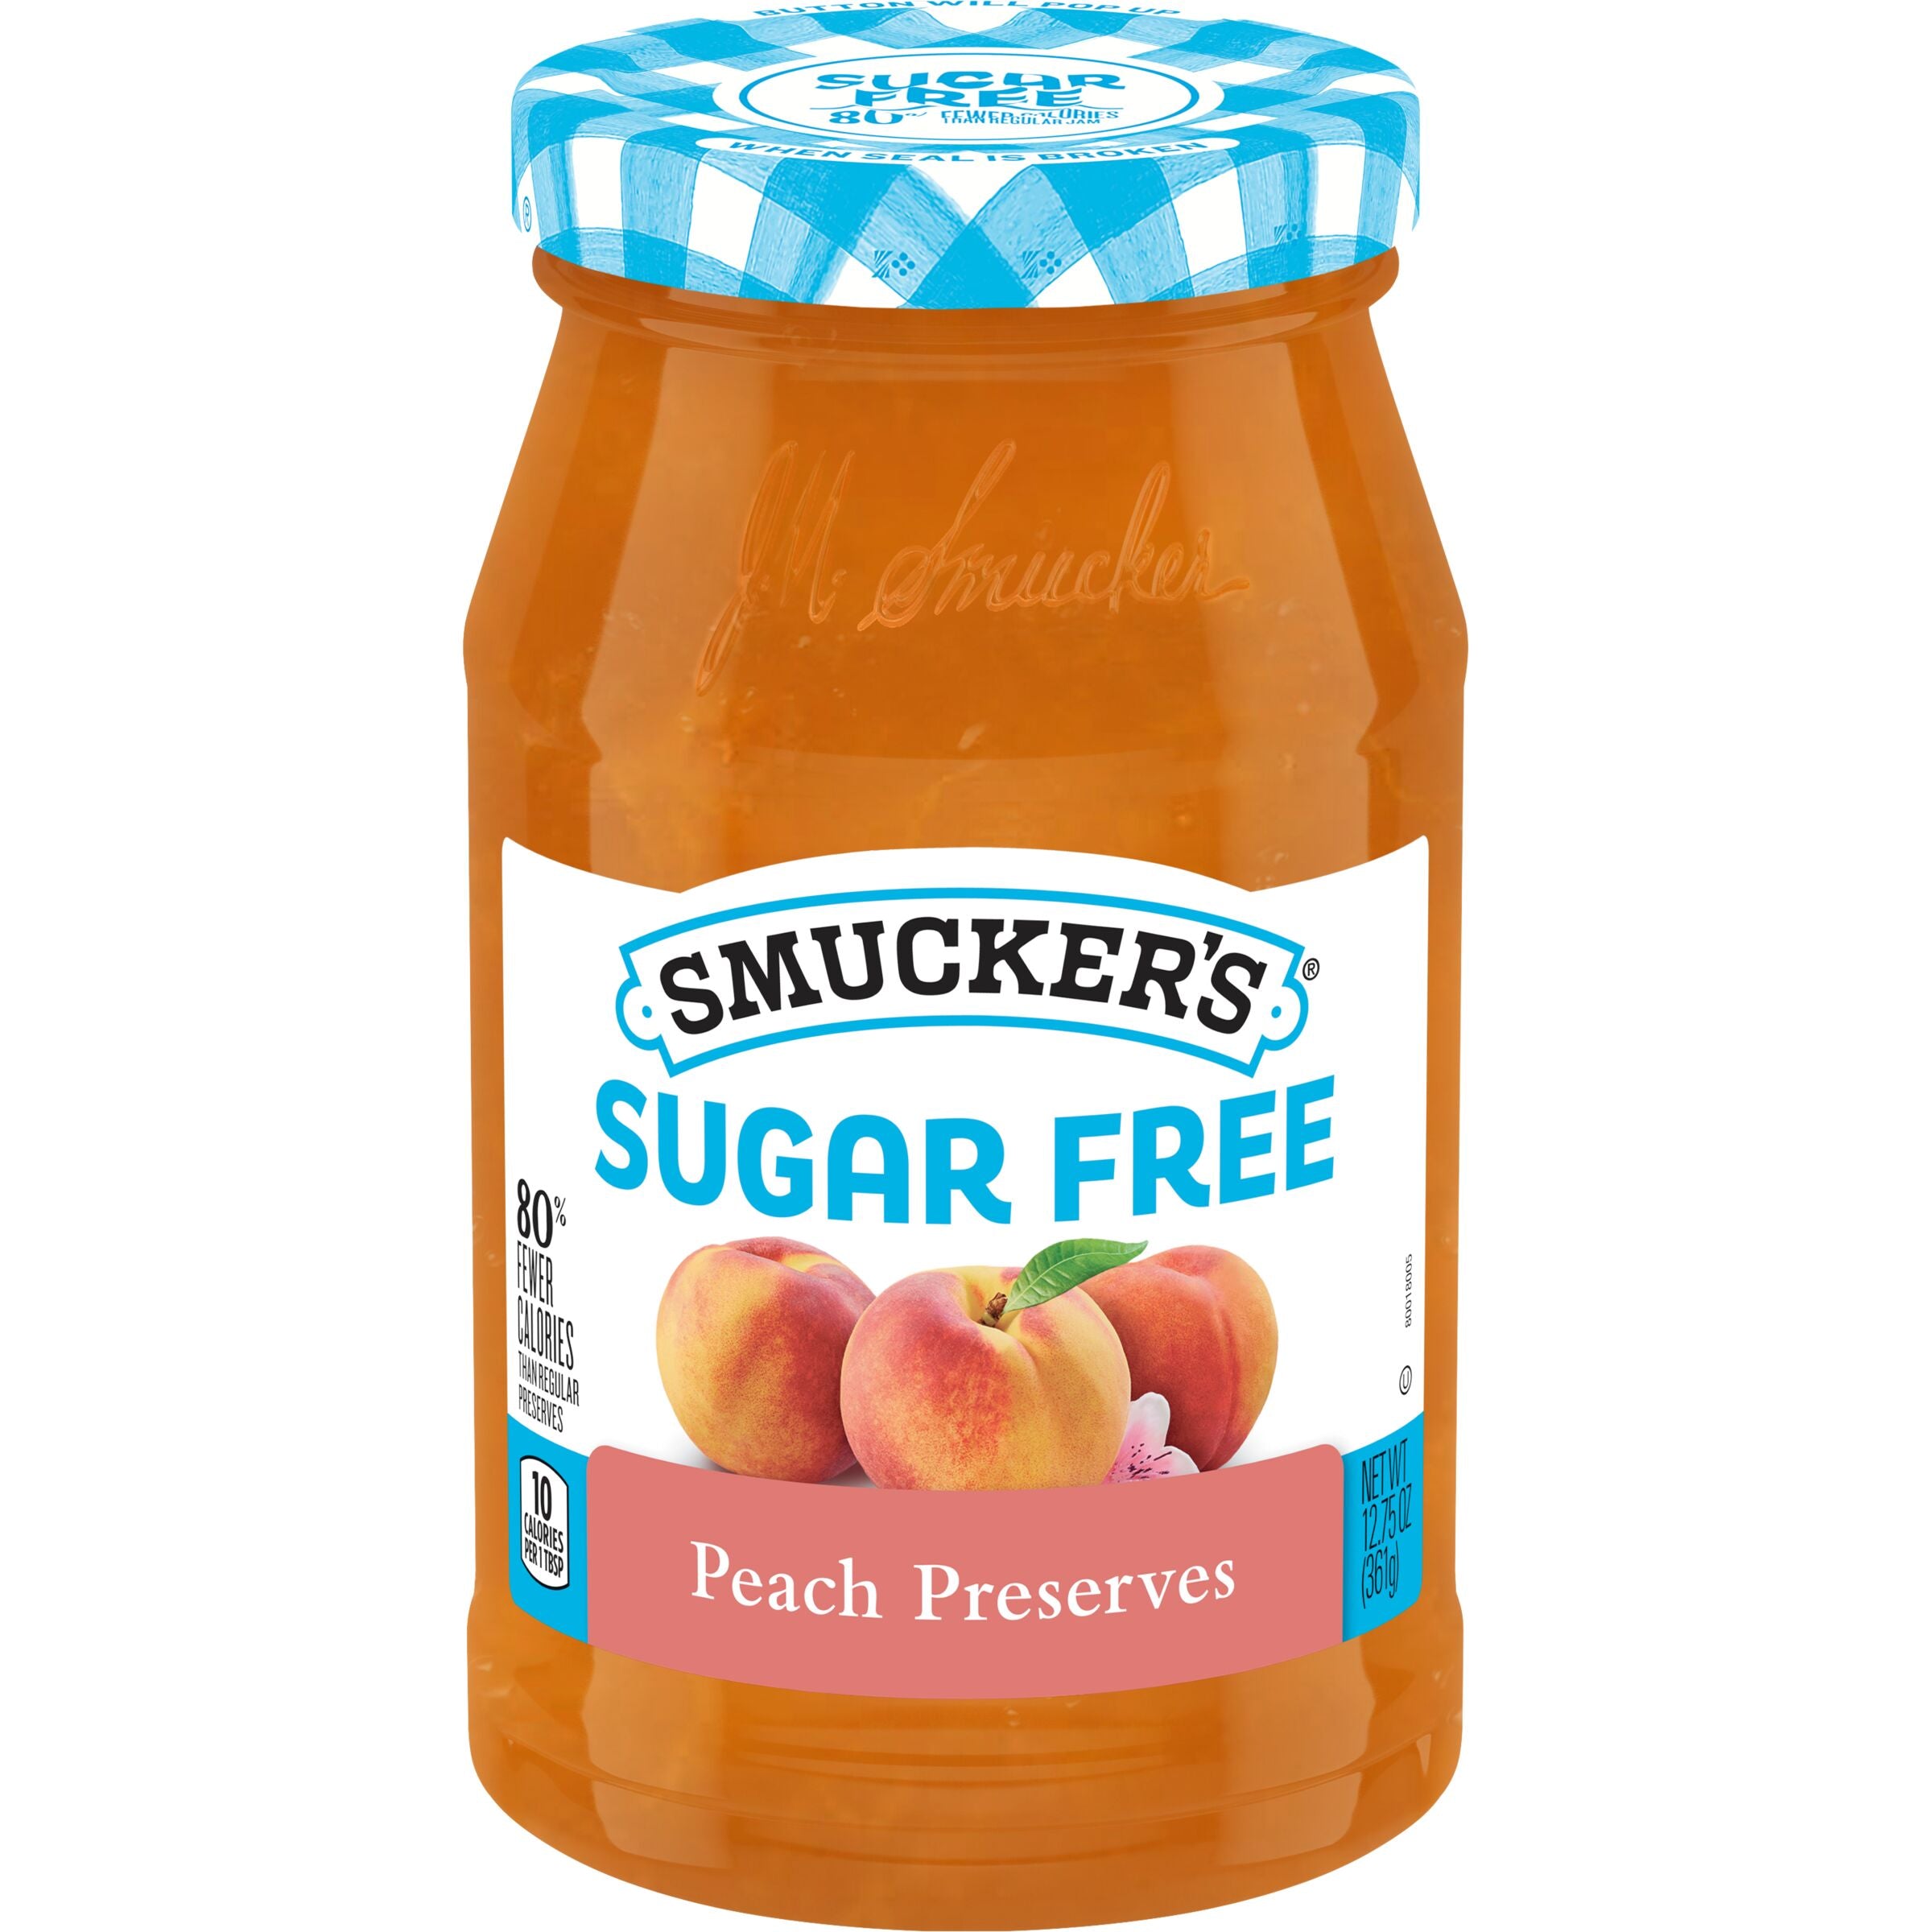 Smucker's Sugar Free Peach Preserves with Splenda Brand Sweetener, 12.75 oz